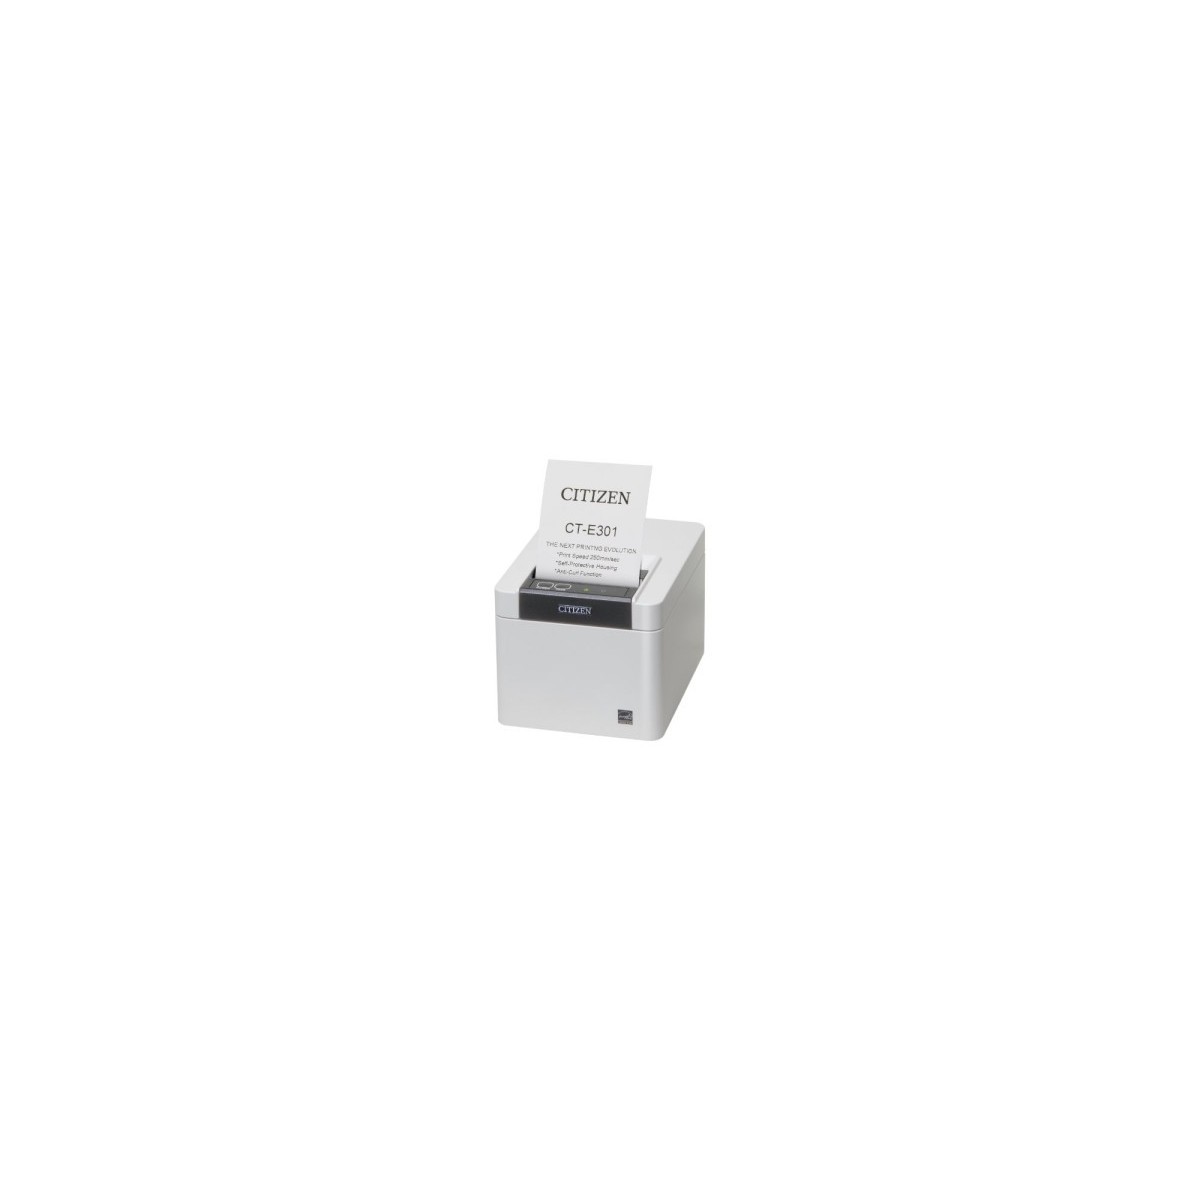 Citizen CT-E301 Printer USB only Pure White - POS printer